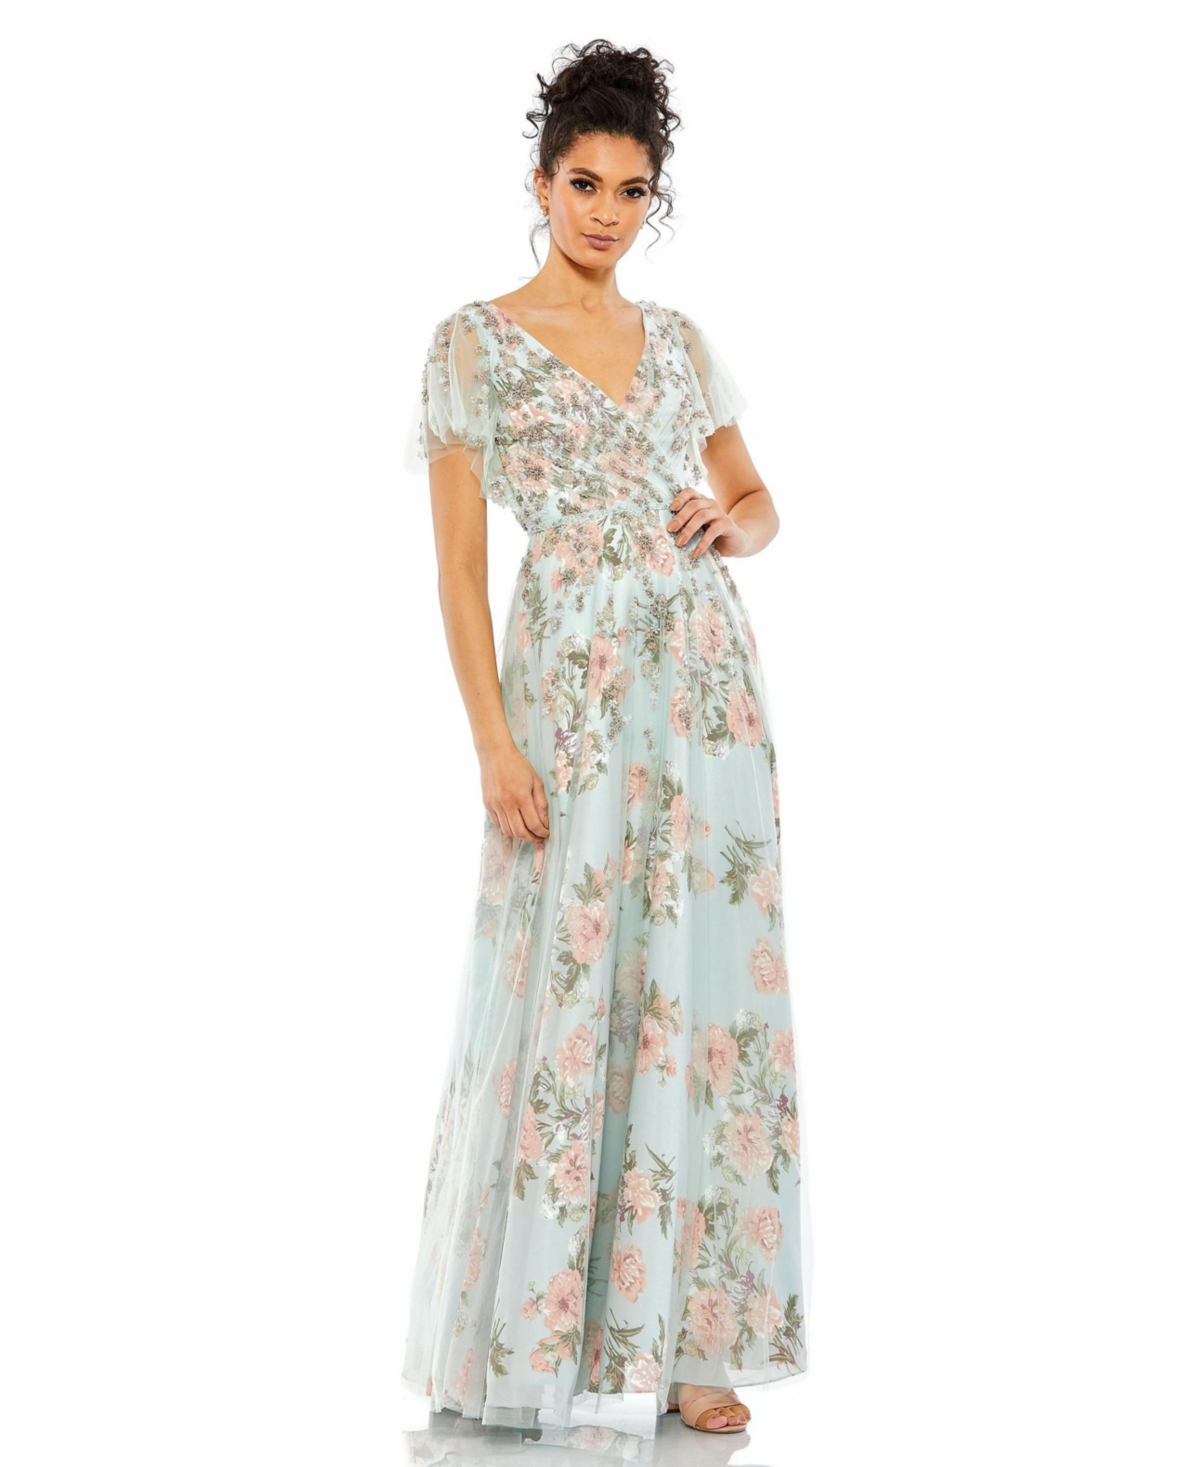 1920s Fashion & Clothing | Roaring 20s Attire Womens Floral Flutter Sleeve V-Neck Maxi Dress - Blue multi $458.00 AT vintagedancer.com